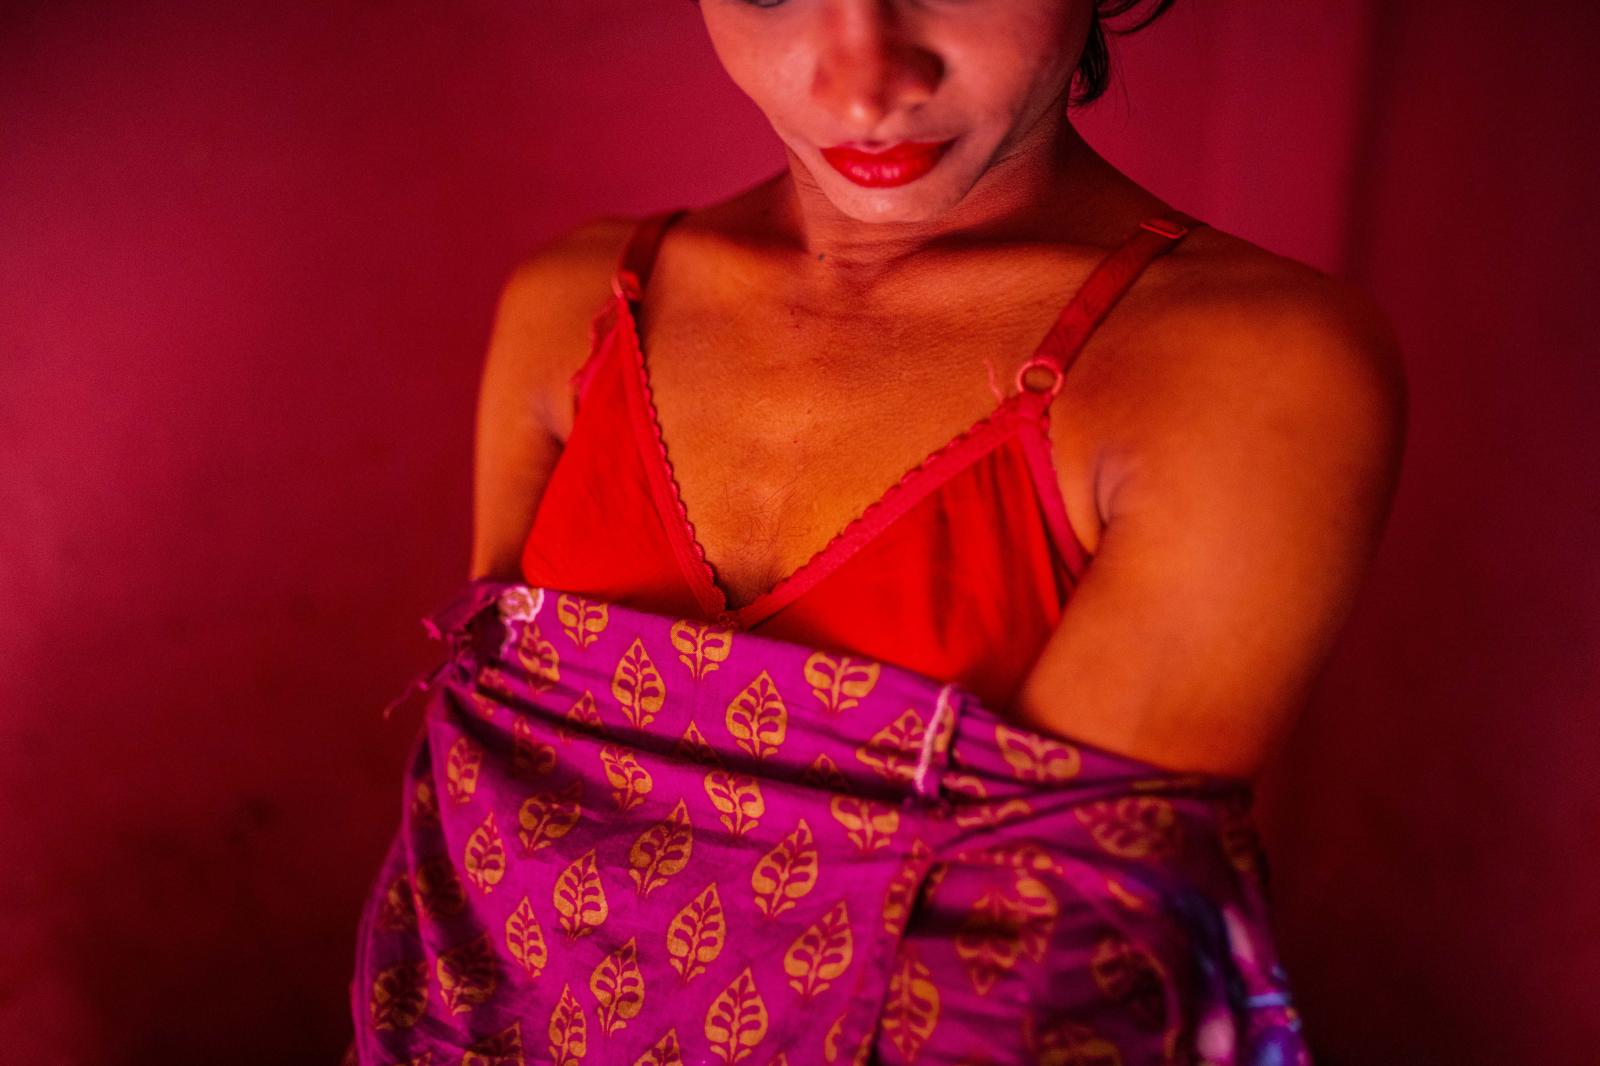  Putuli, a transgender woman, c...gladesh, on November 12, 2020. 